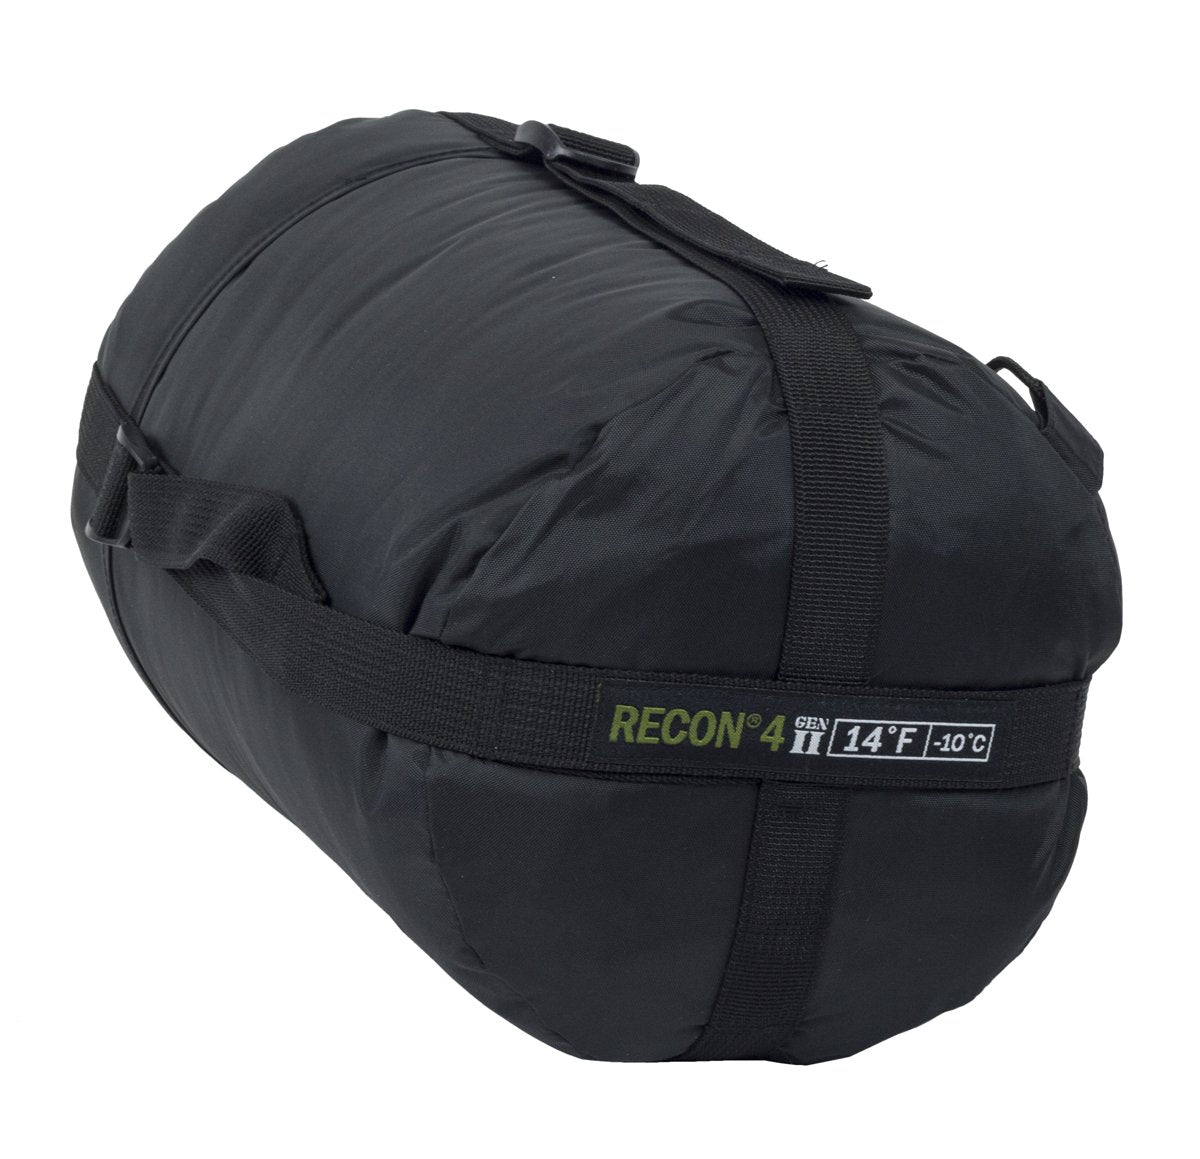 Recon 4 Sleeping Bag